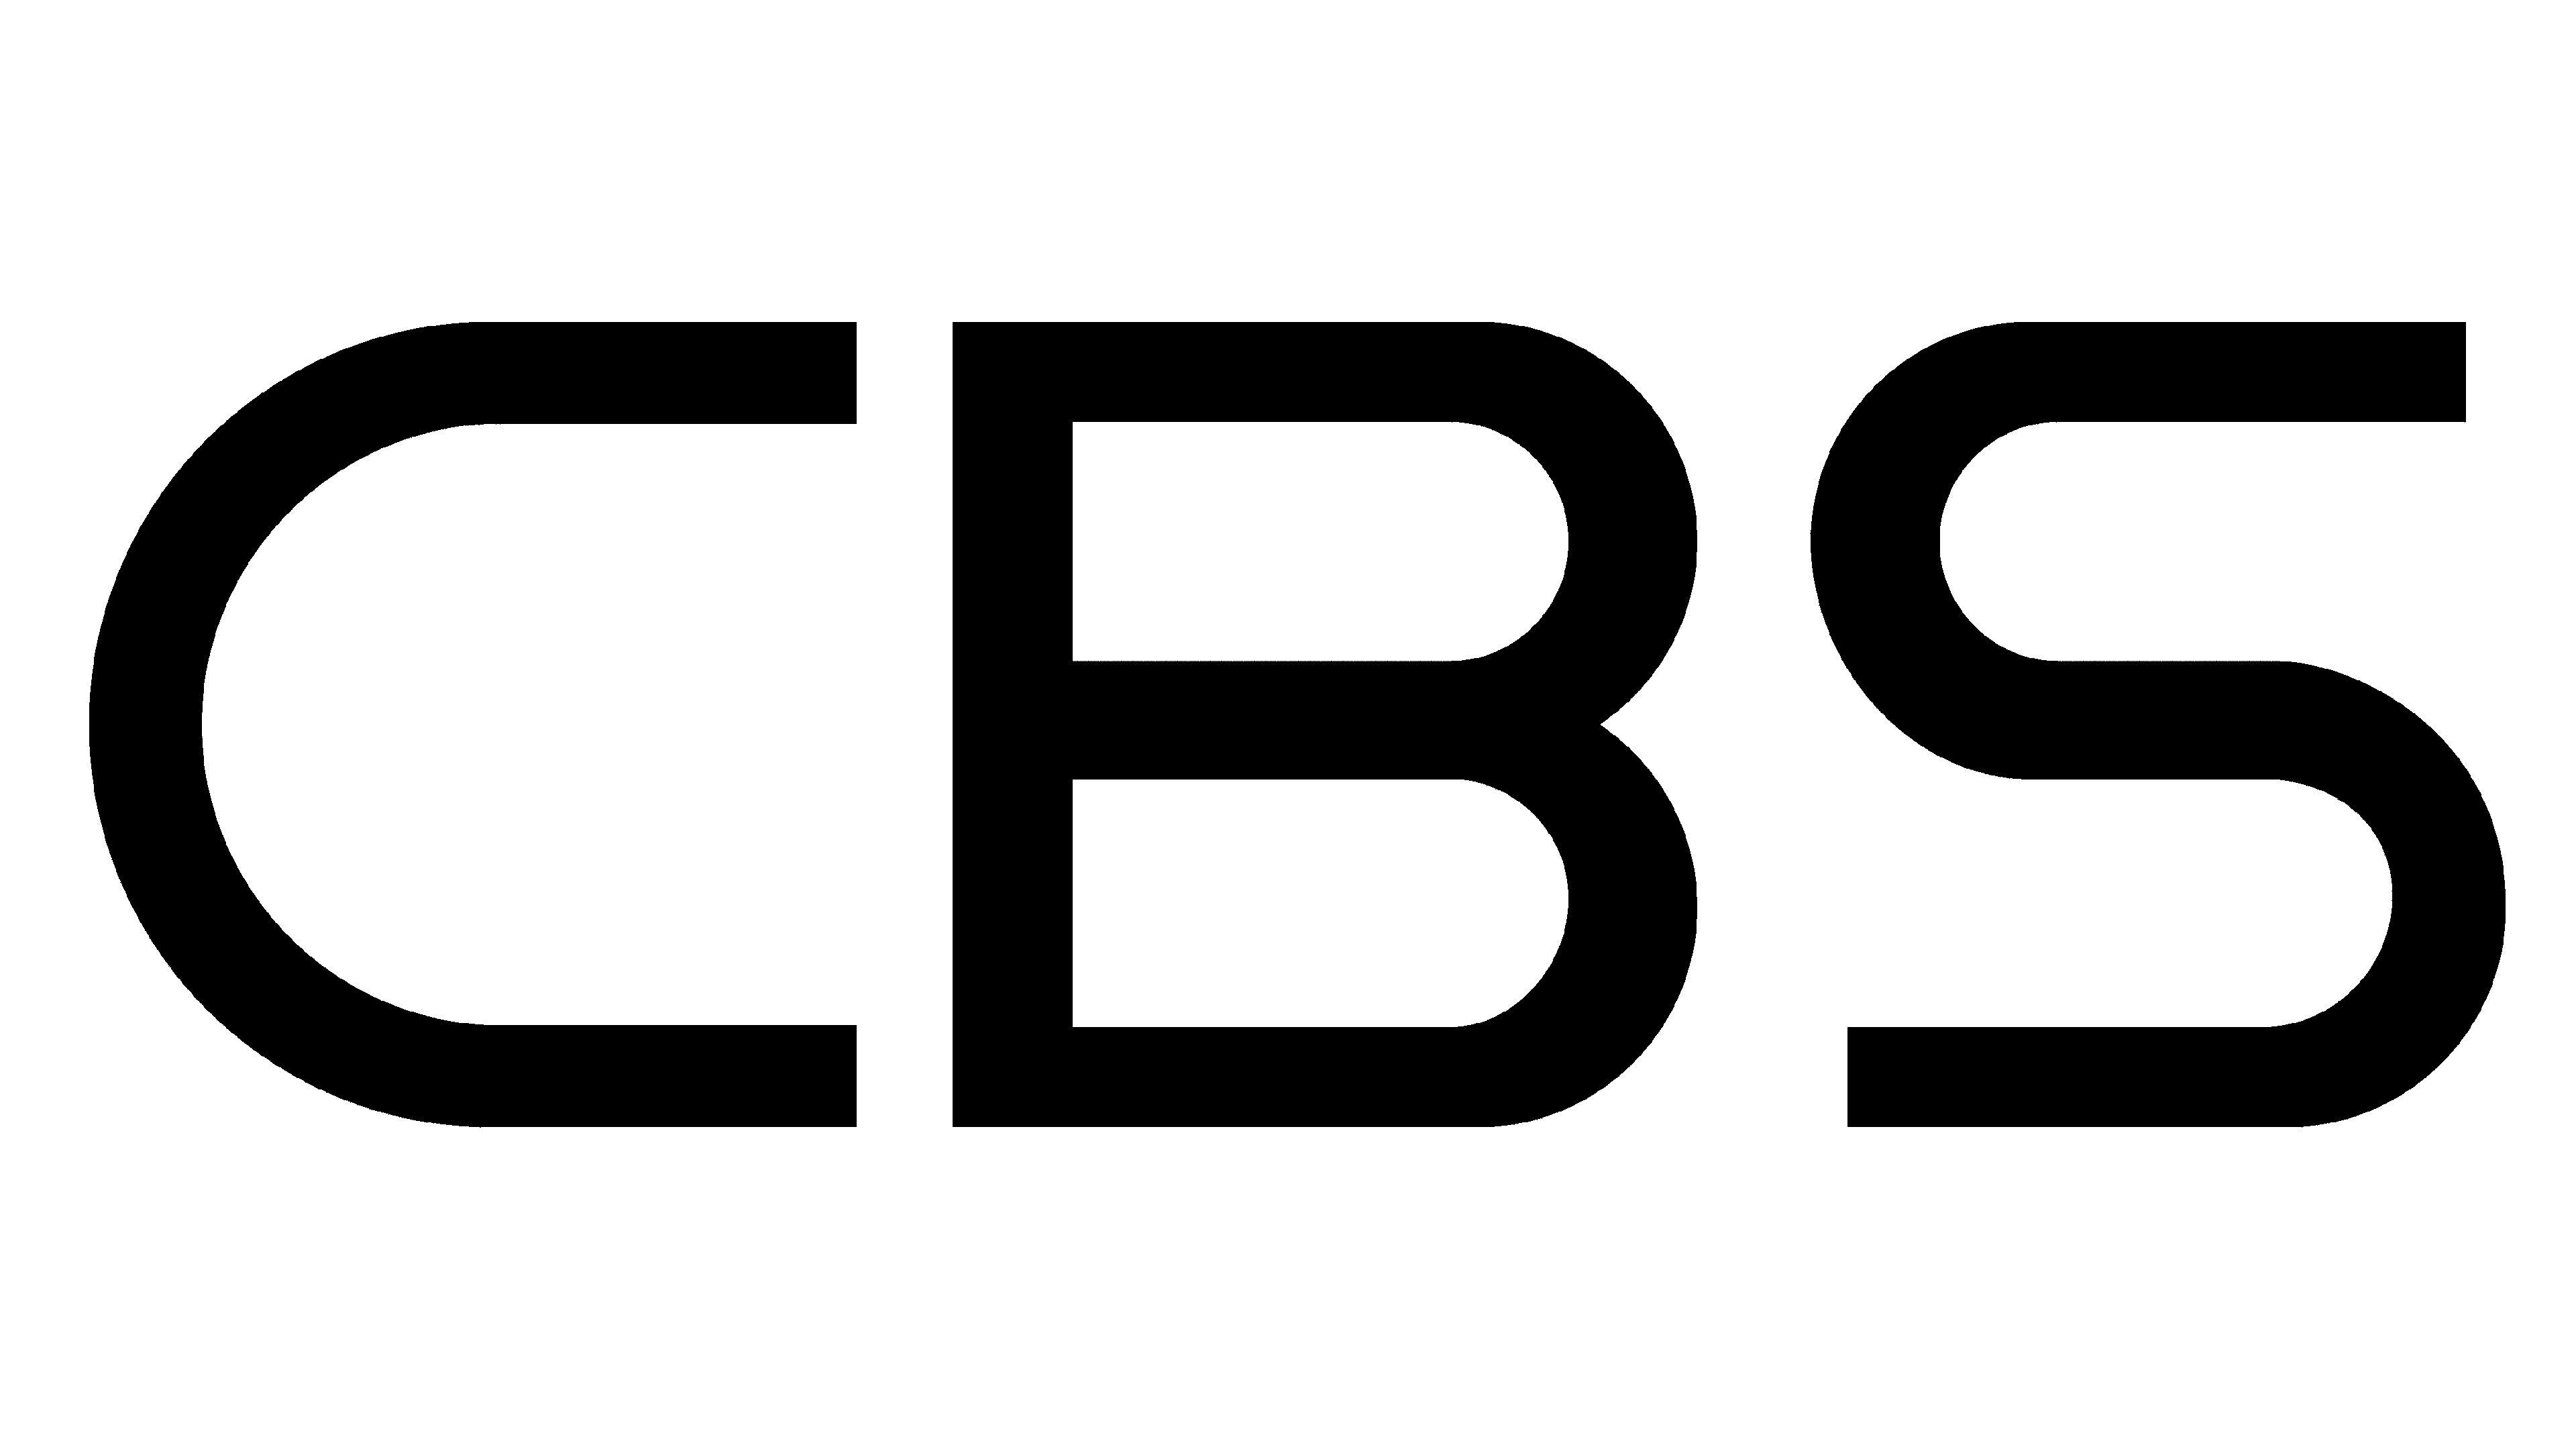 Cbs Logo Transparent Png Stickpng - vrogue.co